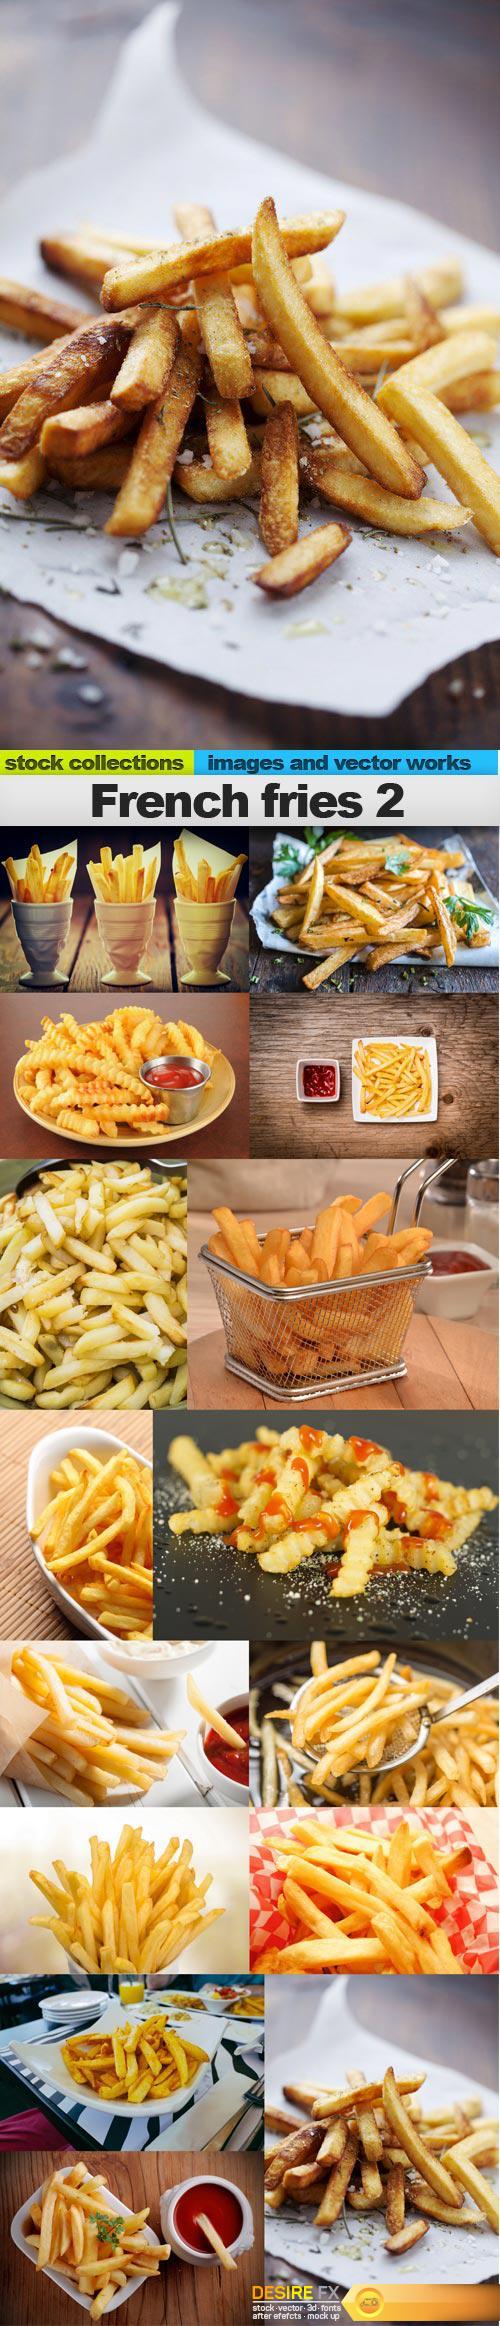 French fries 2, 15 x UHQ JPEG